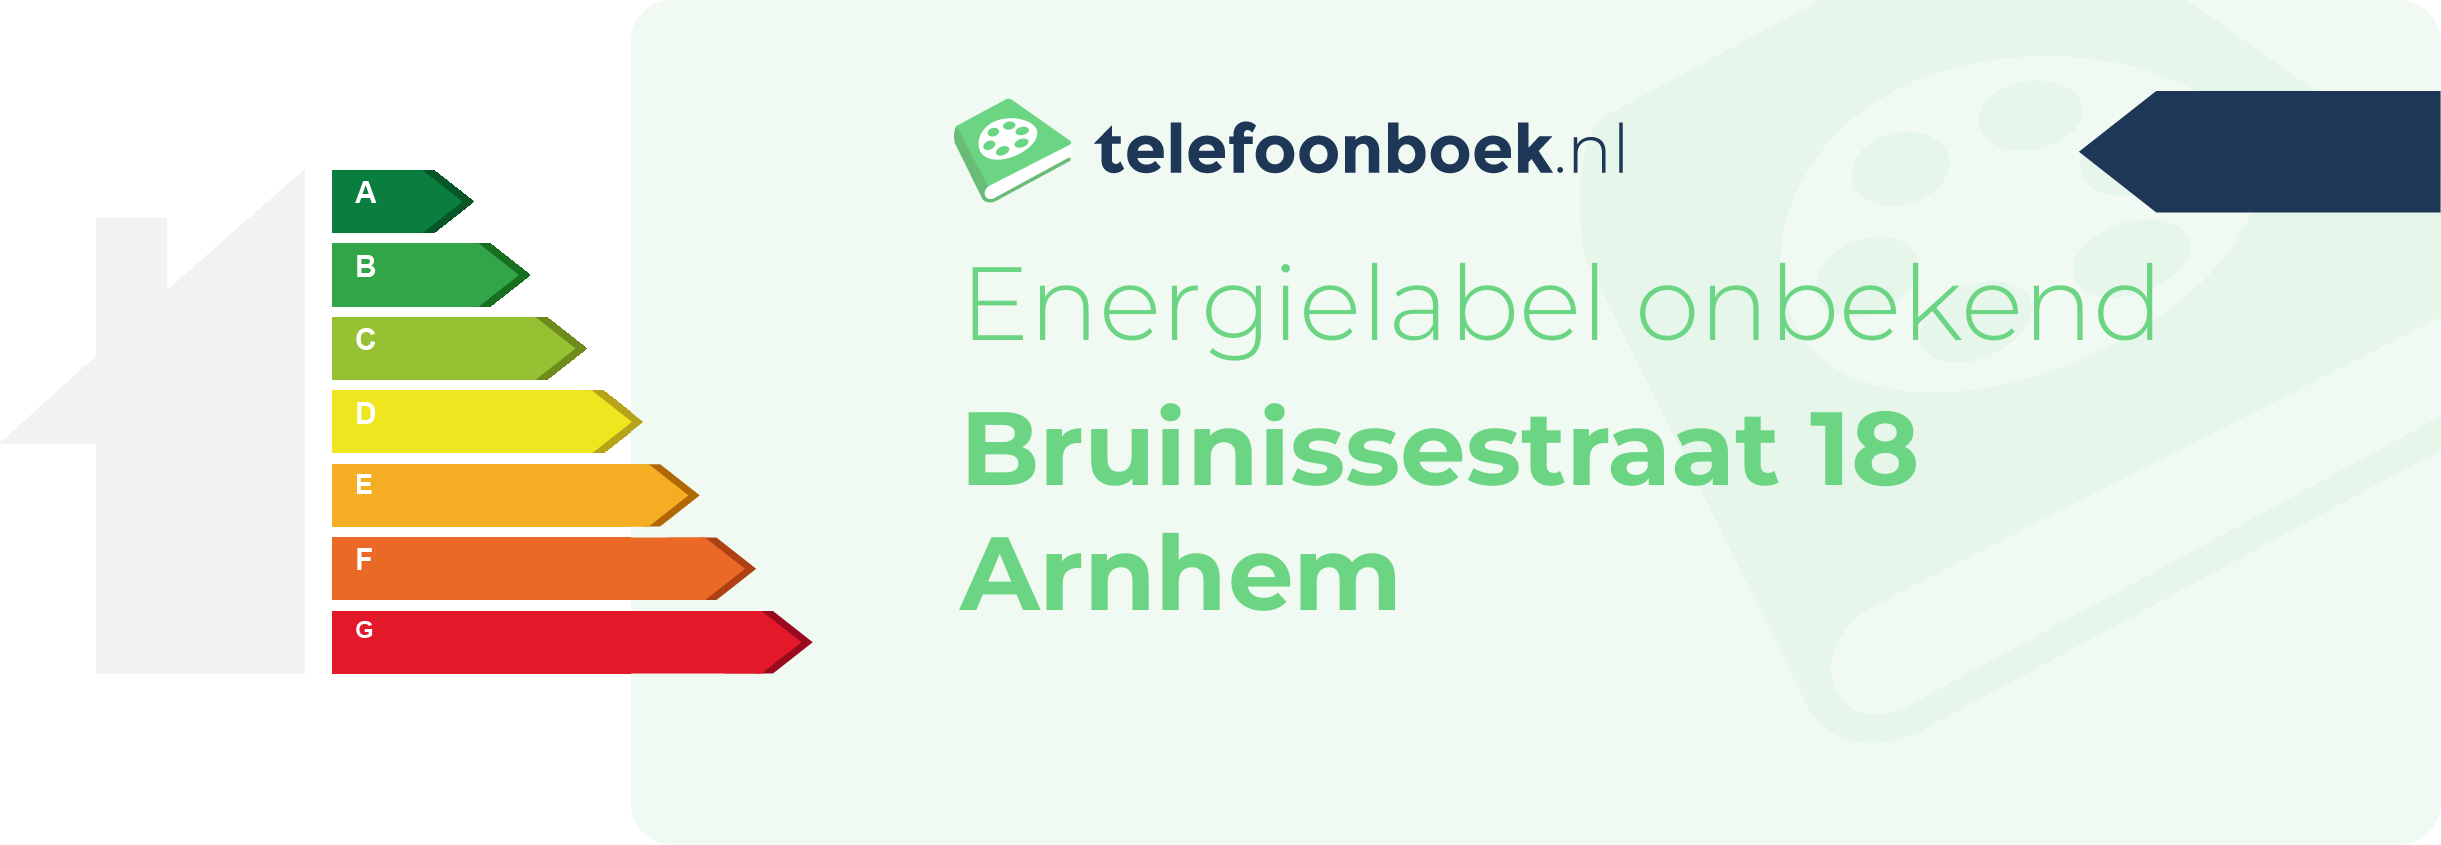 Energielabel Bruinissestraat 18 Arnhem